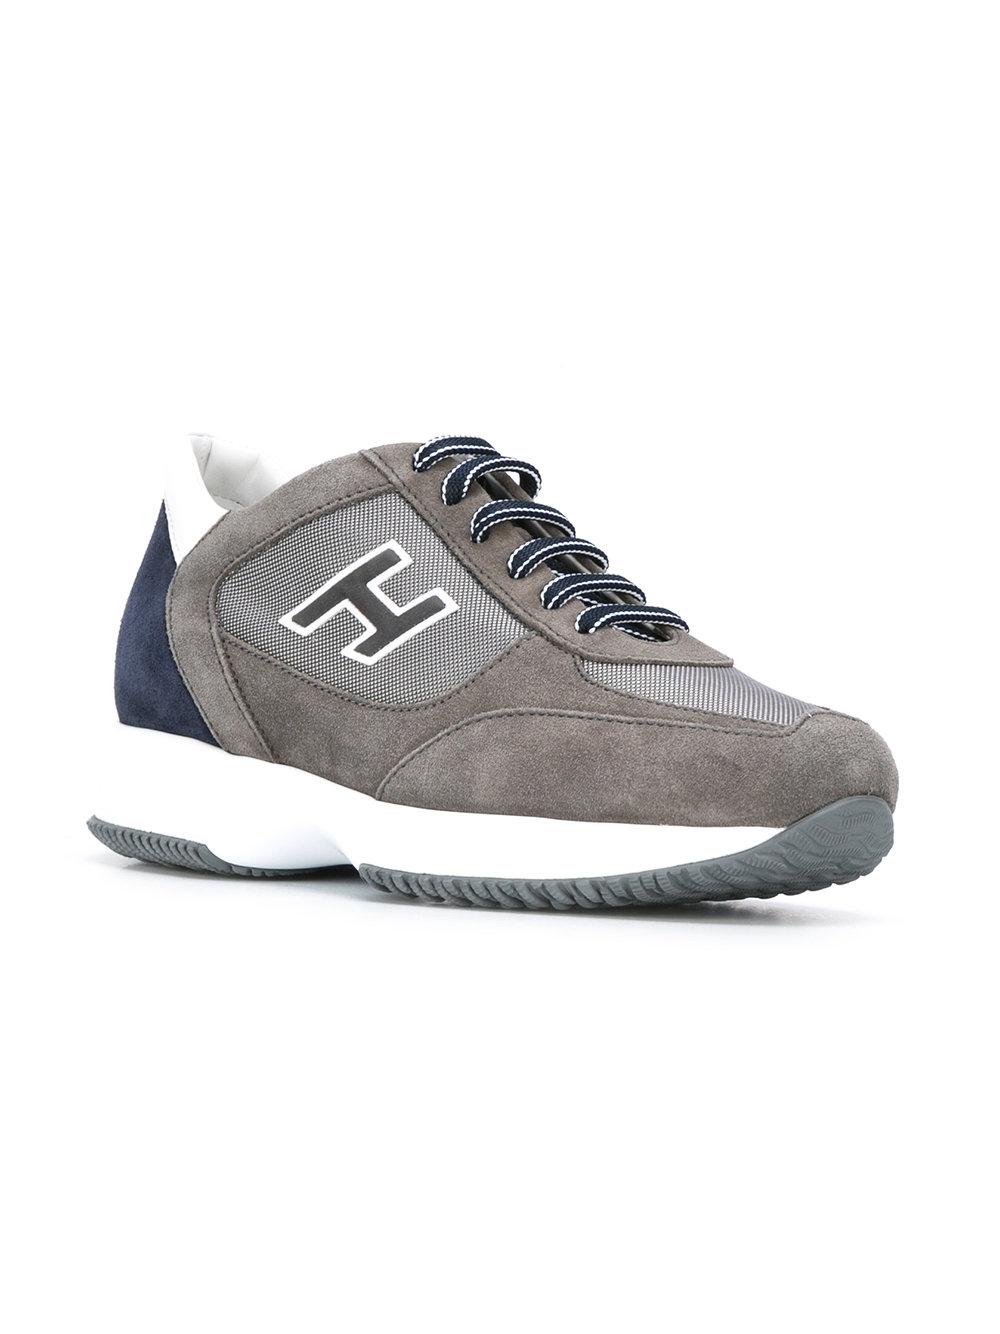 Lyst - Hogan New Interactive Sneakers in Gray for Men